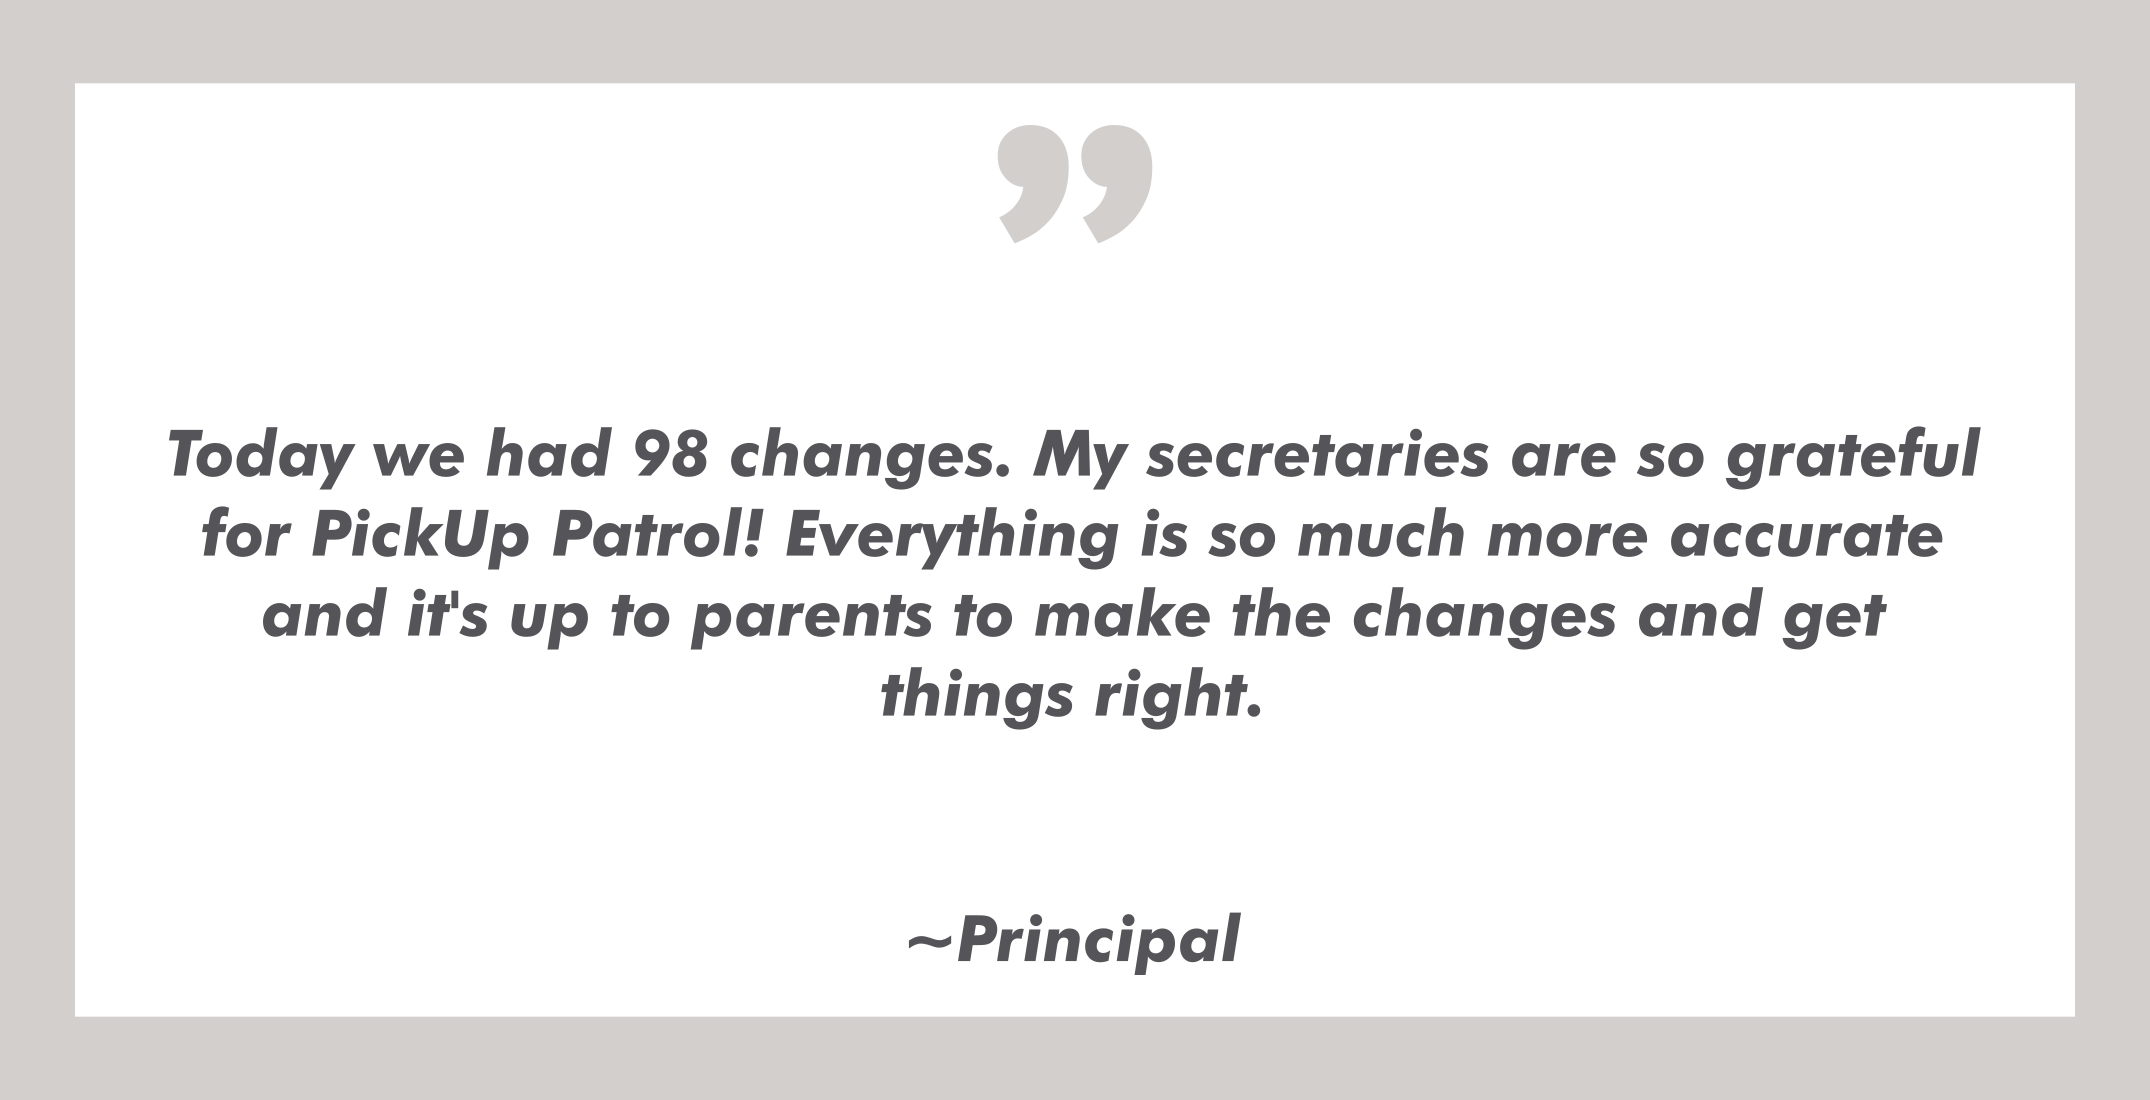 PickUp Patrol school dismissal software testimonial from principal